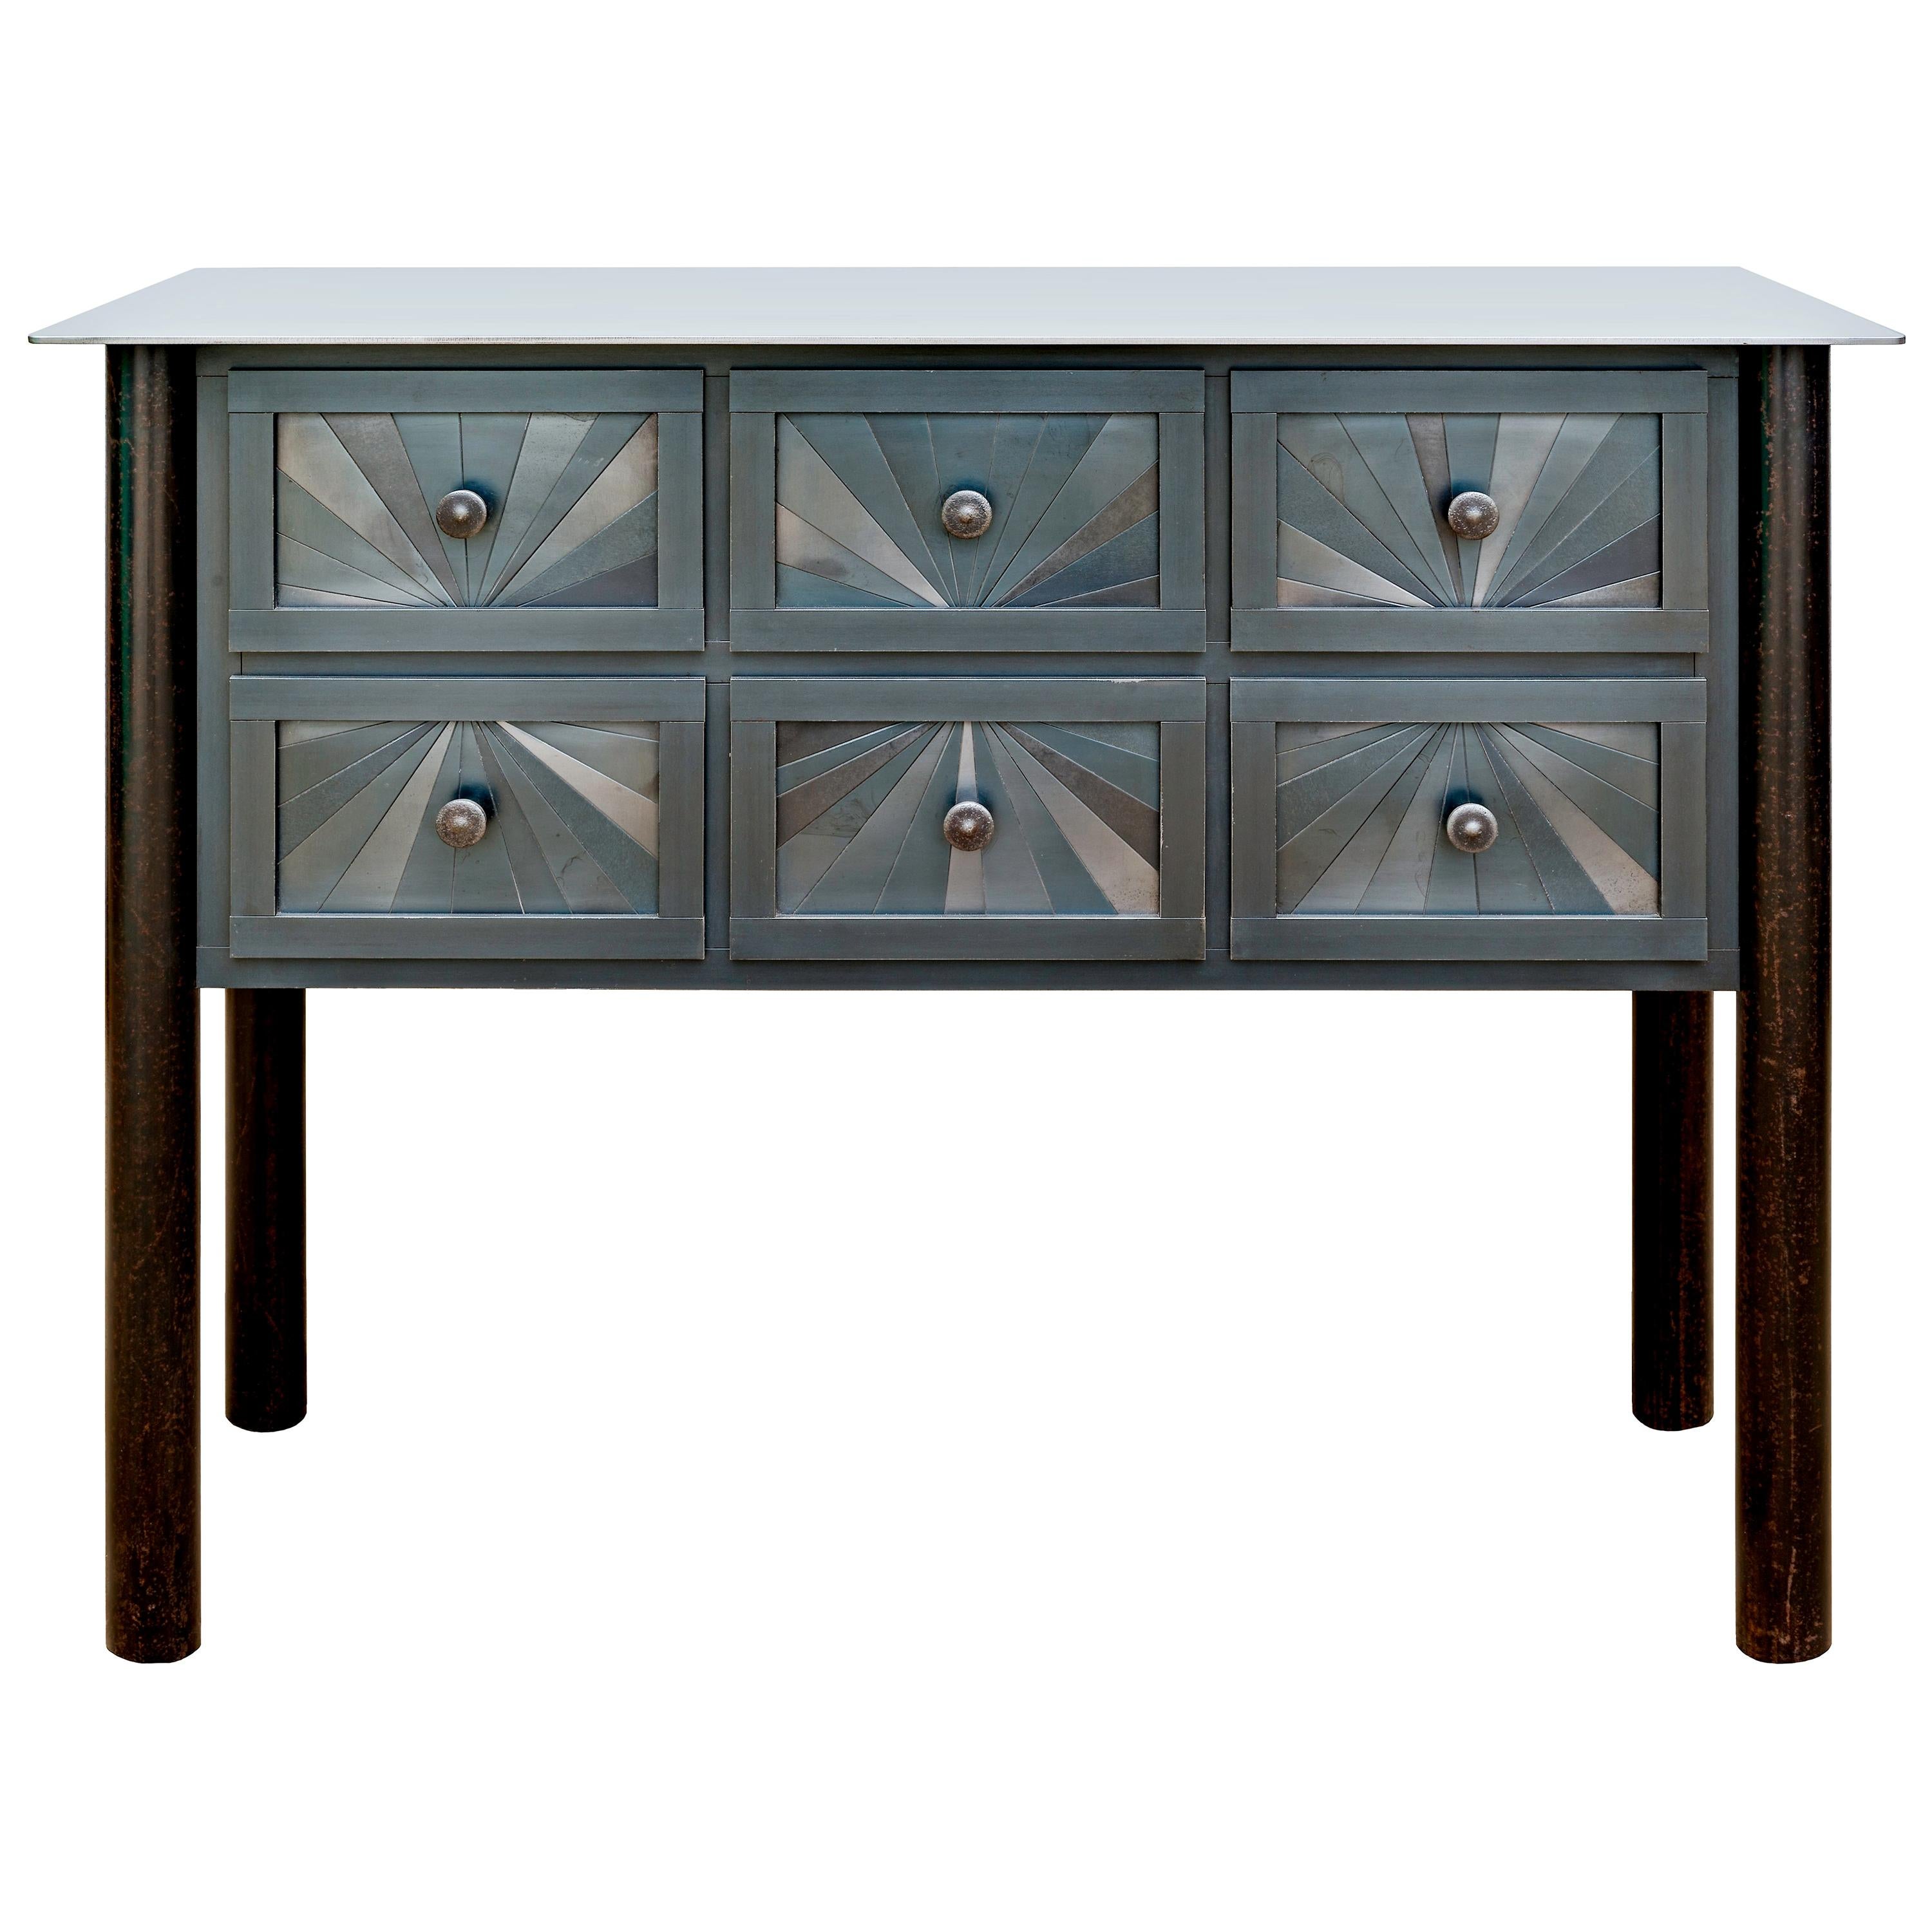 Jim Rose Steel Furniture - Six-Drawer Starburst Counter, Monochromatic Design